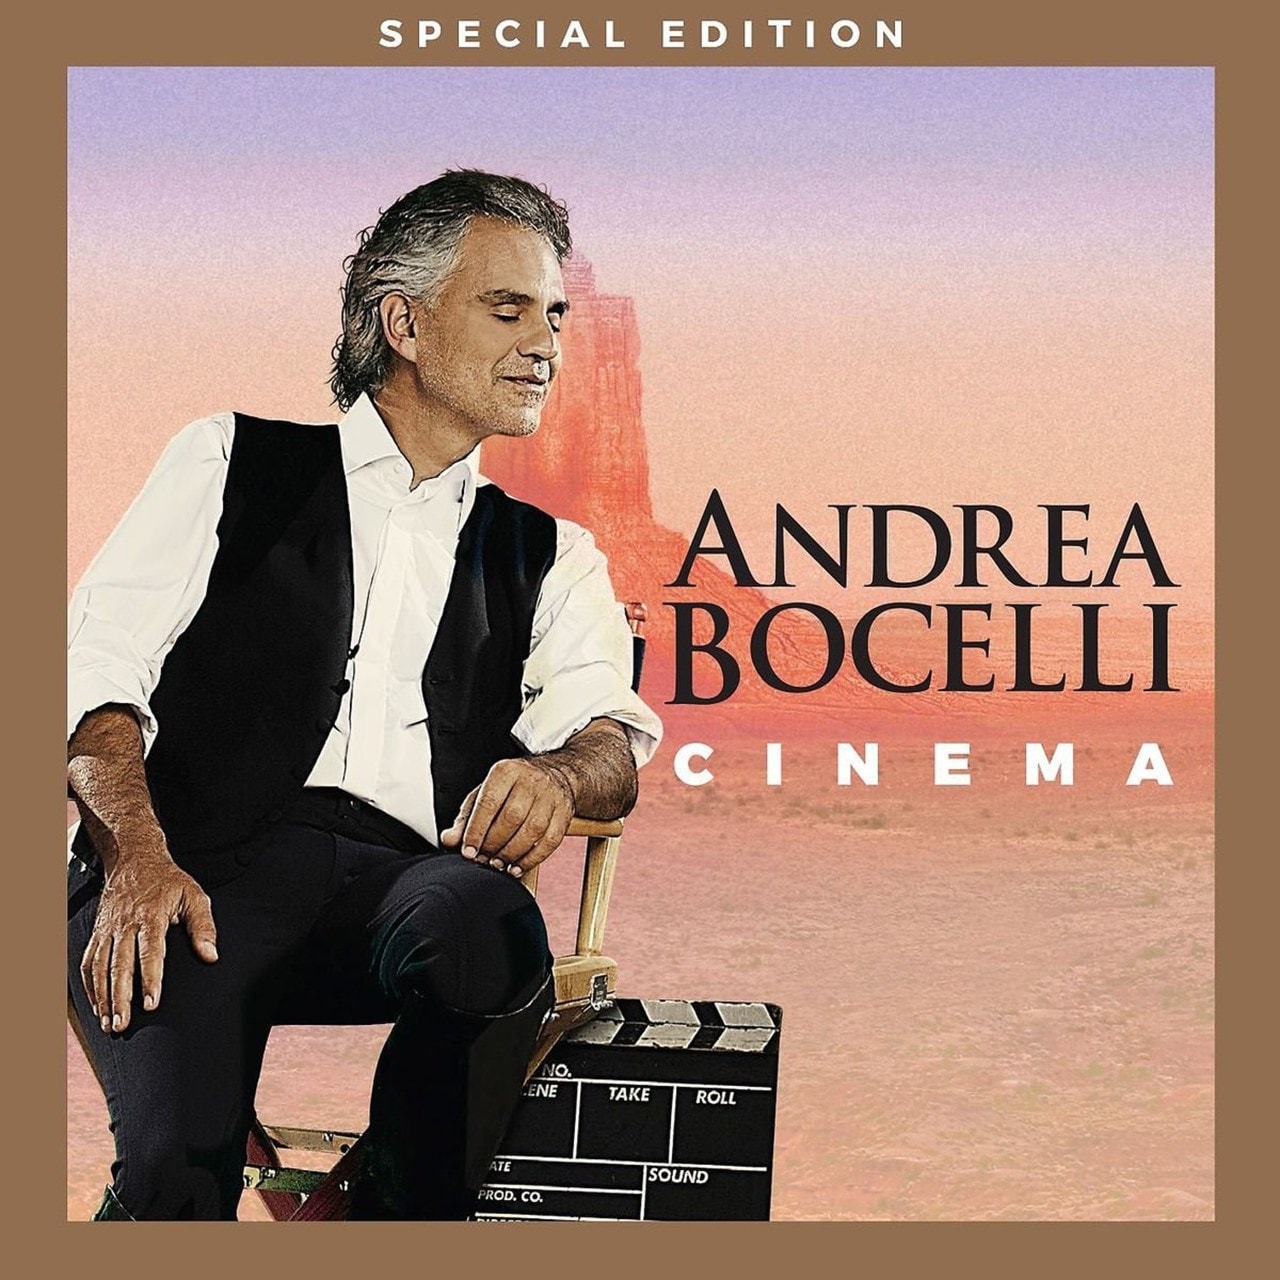 Andrea Bocelli Cinema CD/DVD Album Free shipping over £20 HMV Store